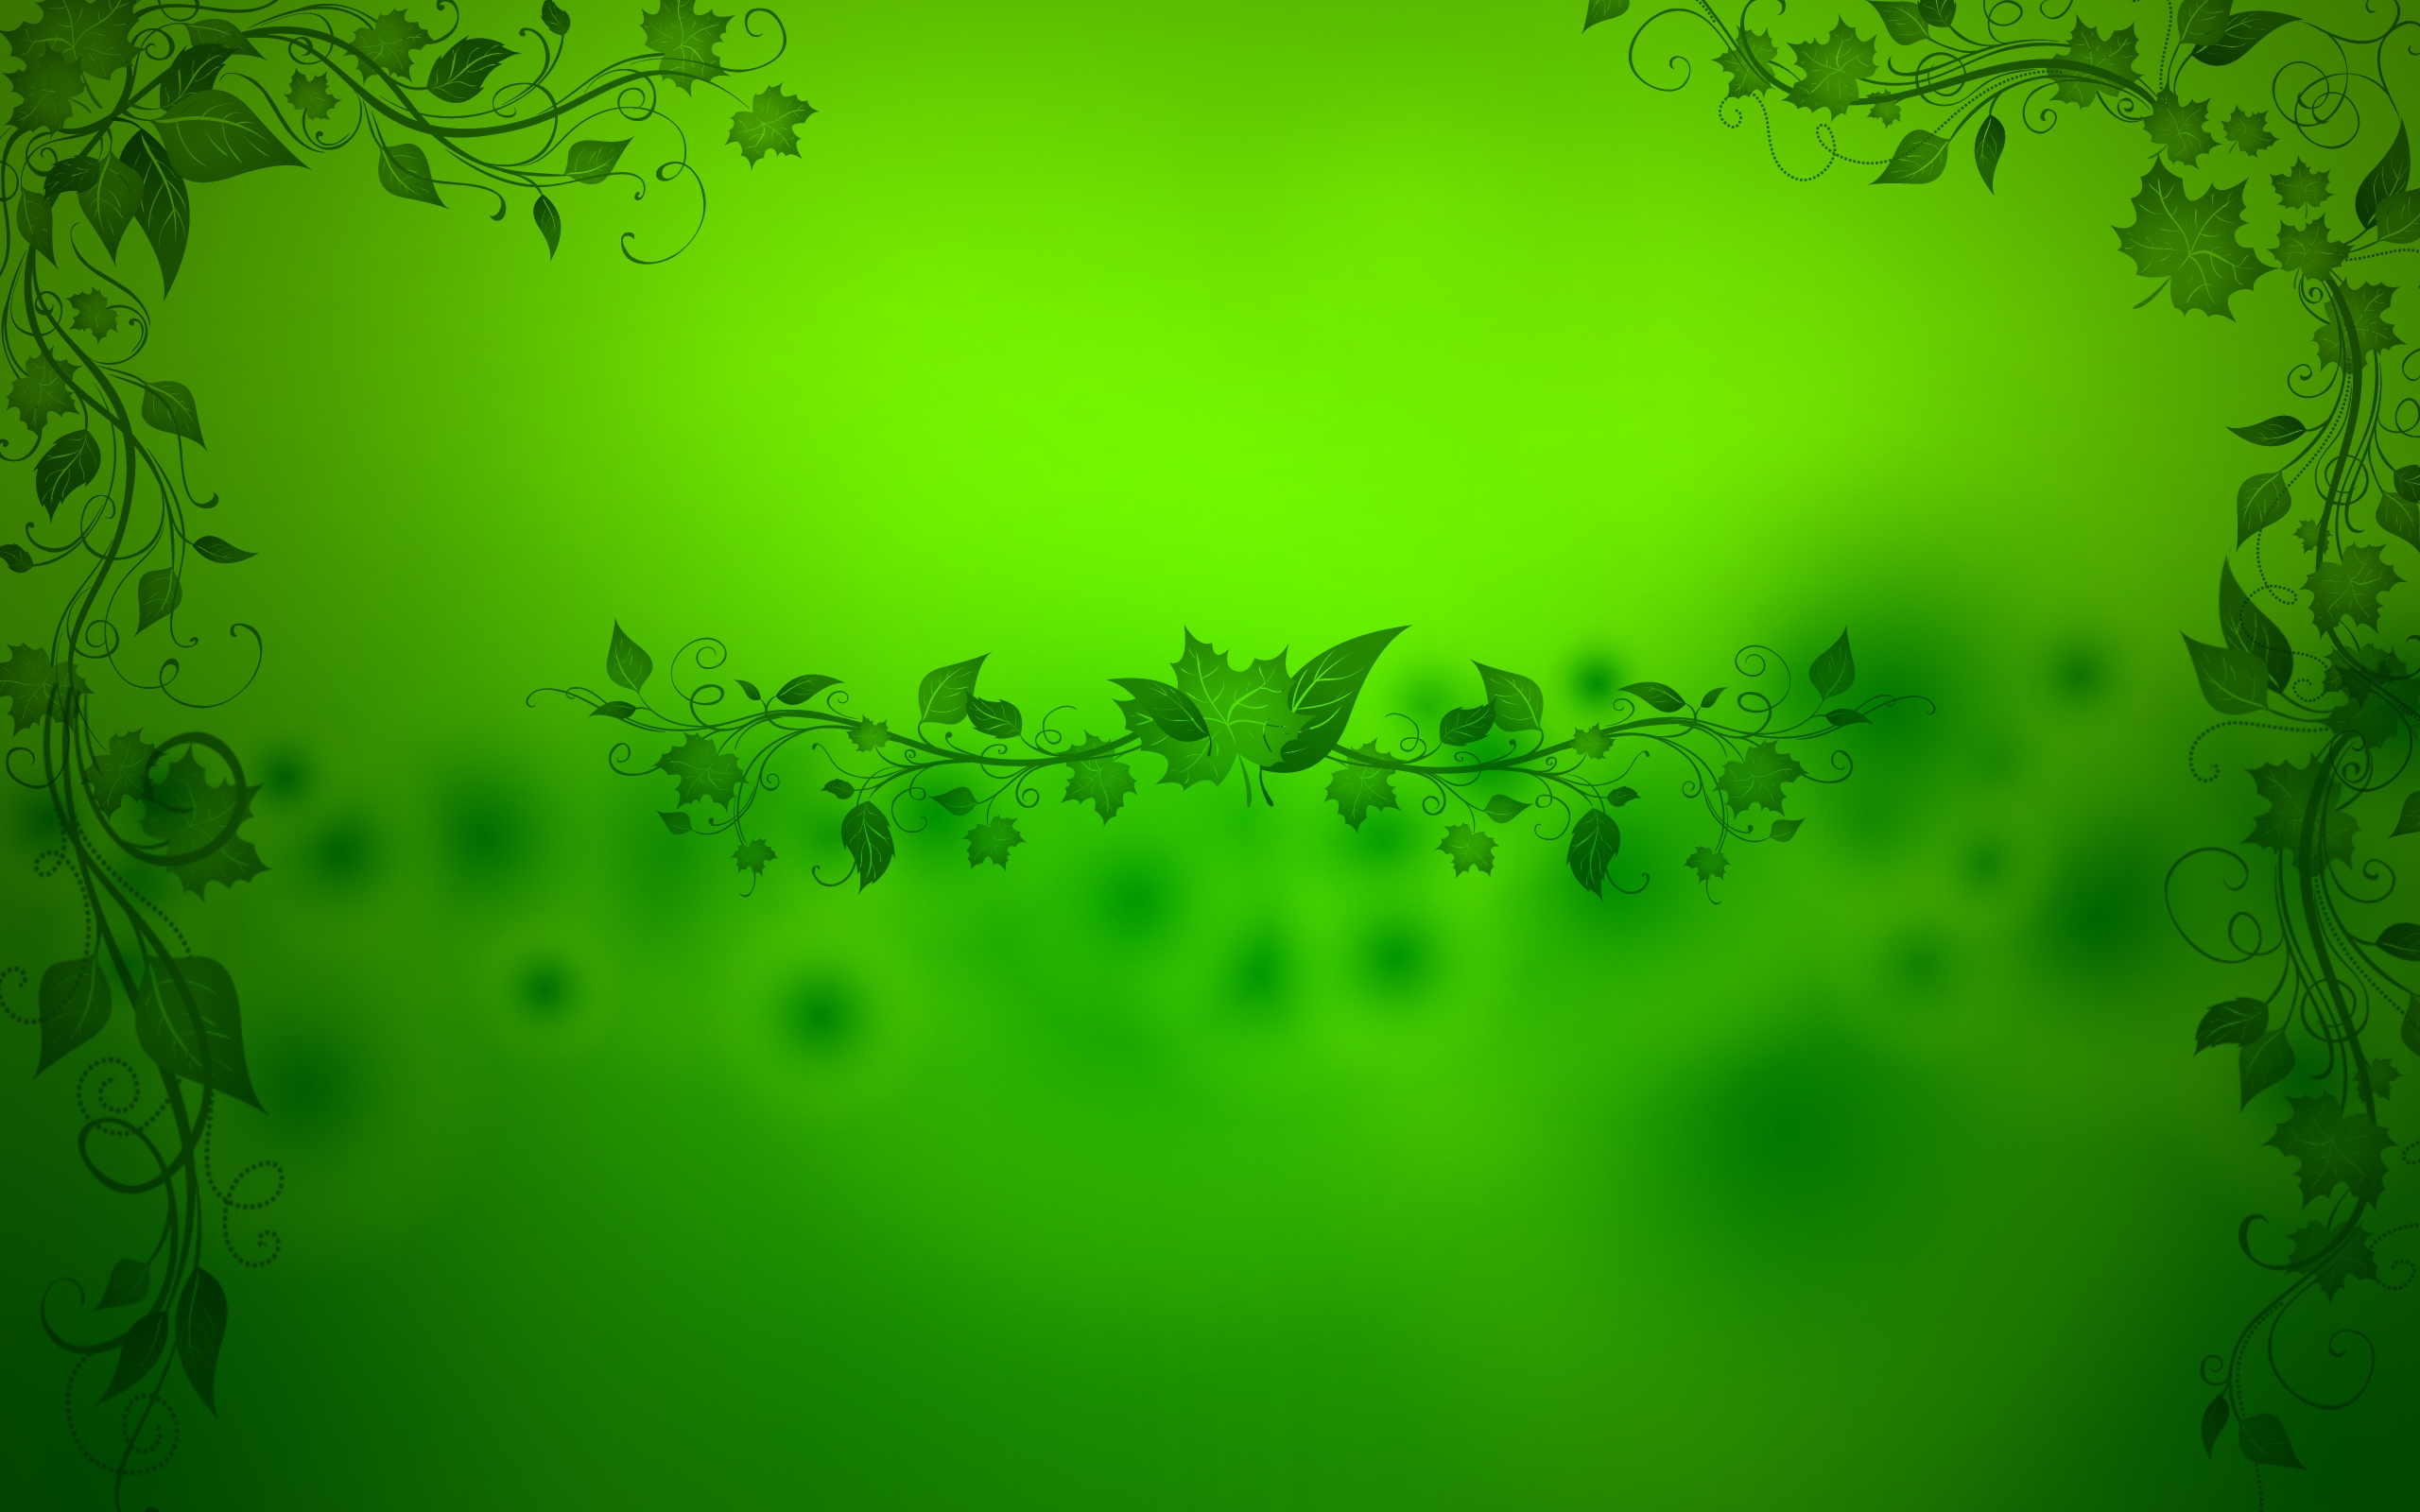 green colour wallpaper hd